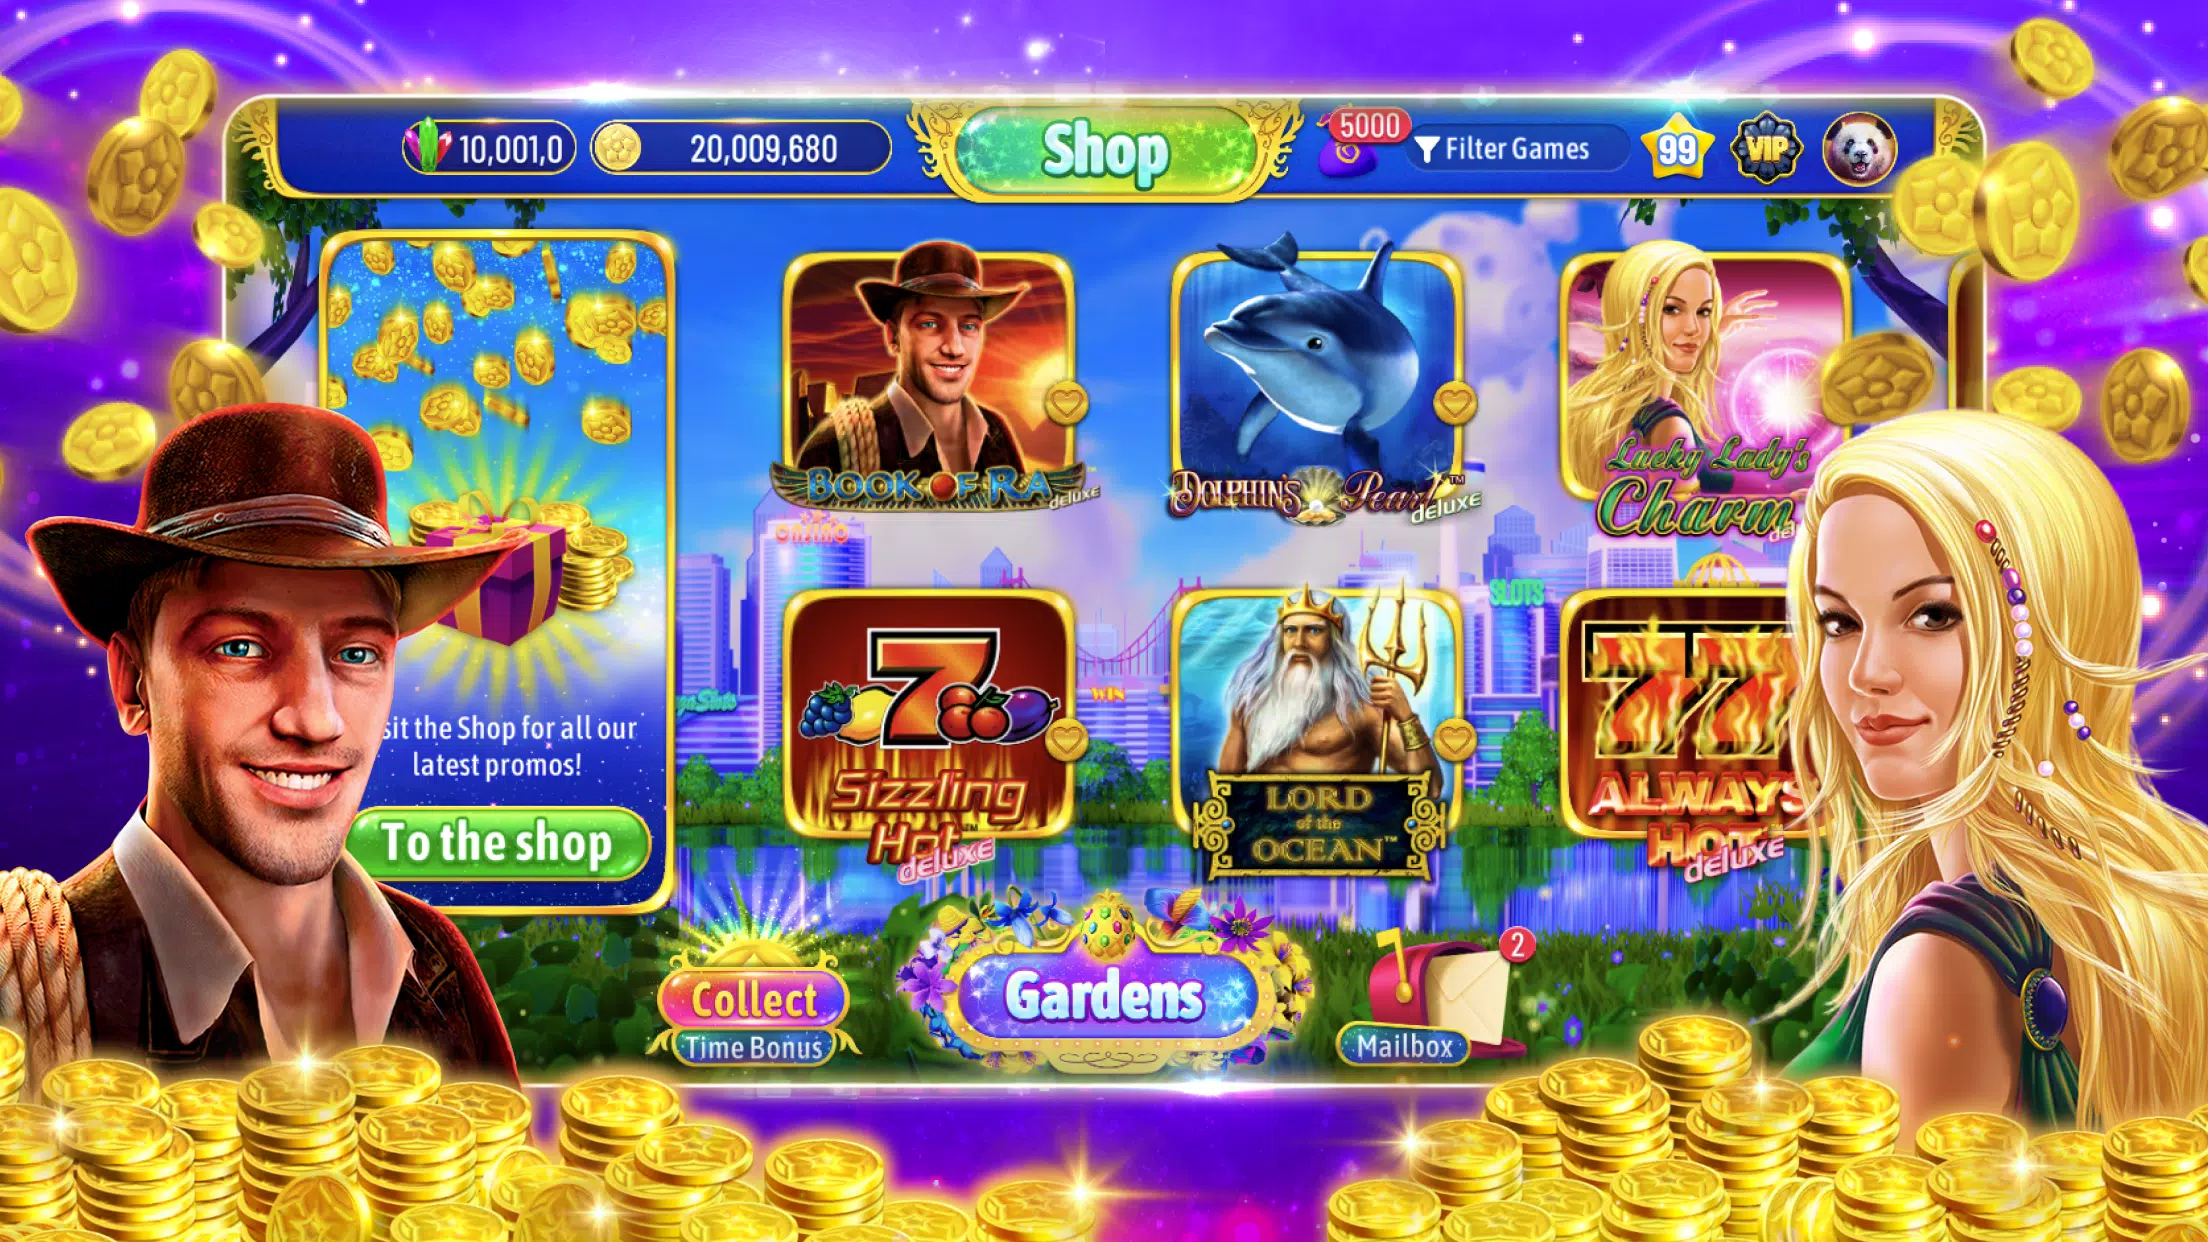 Slotpark - Online Casino Games - Apps on Google Play